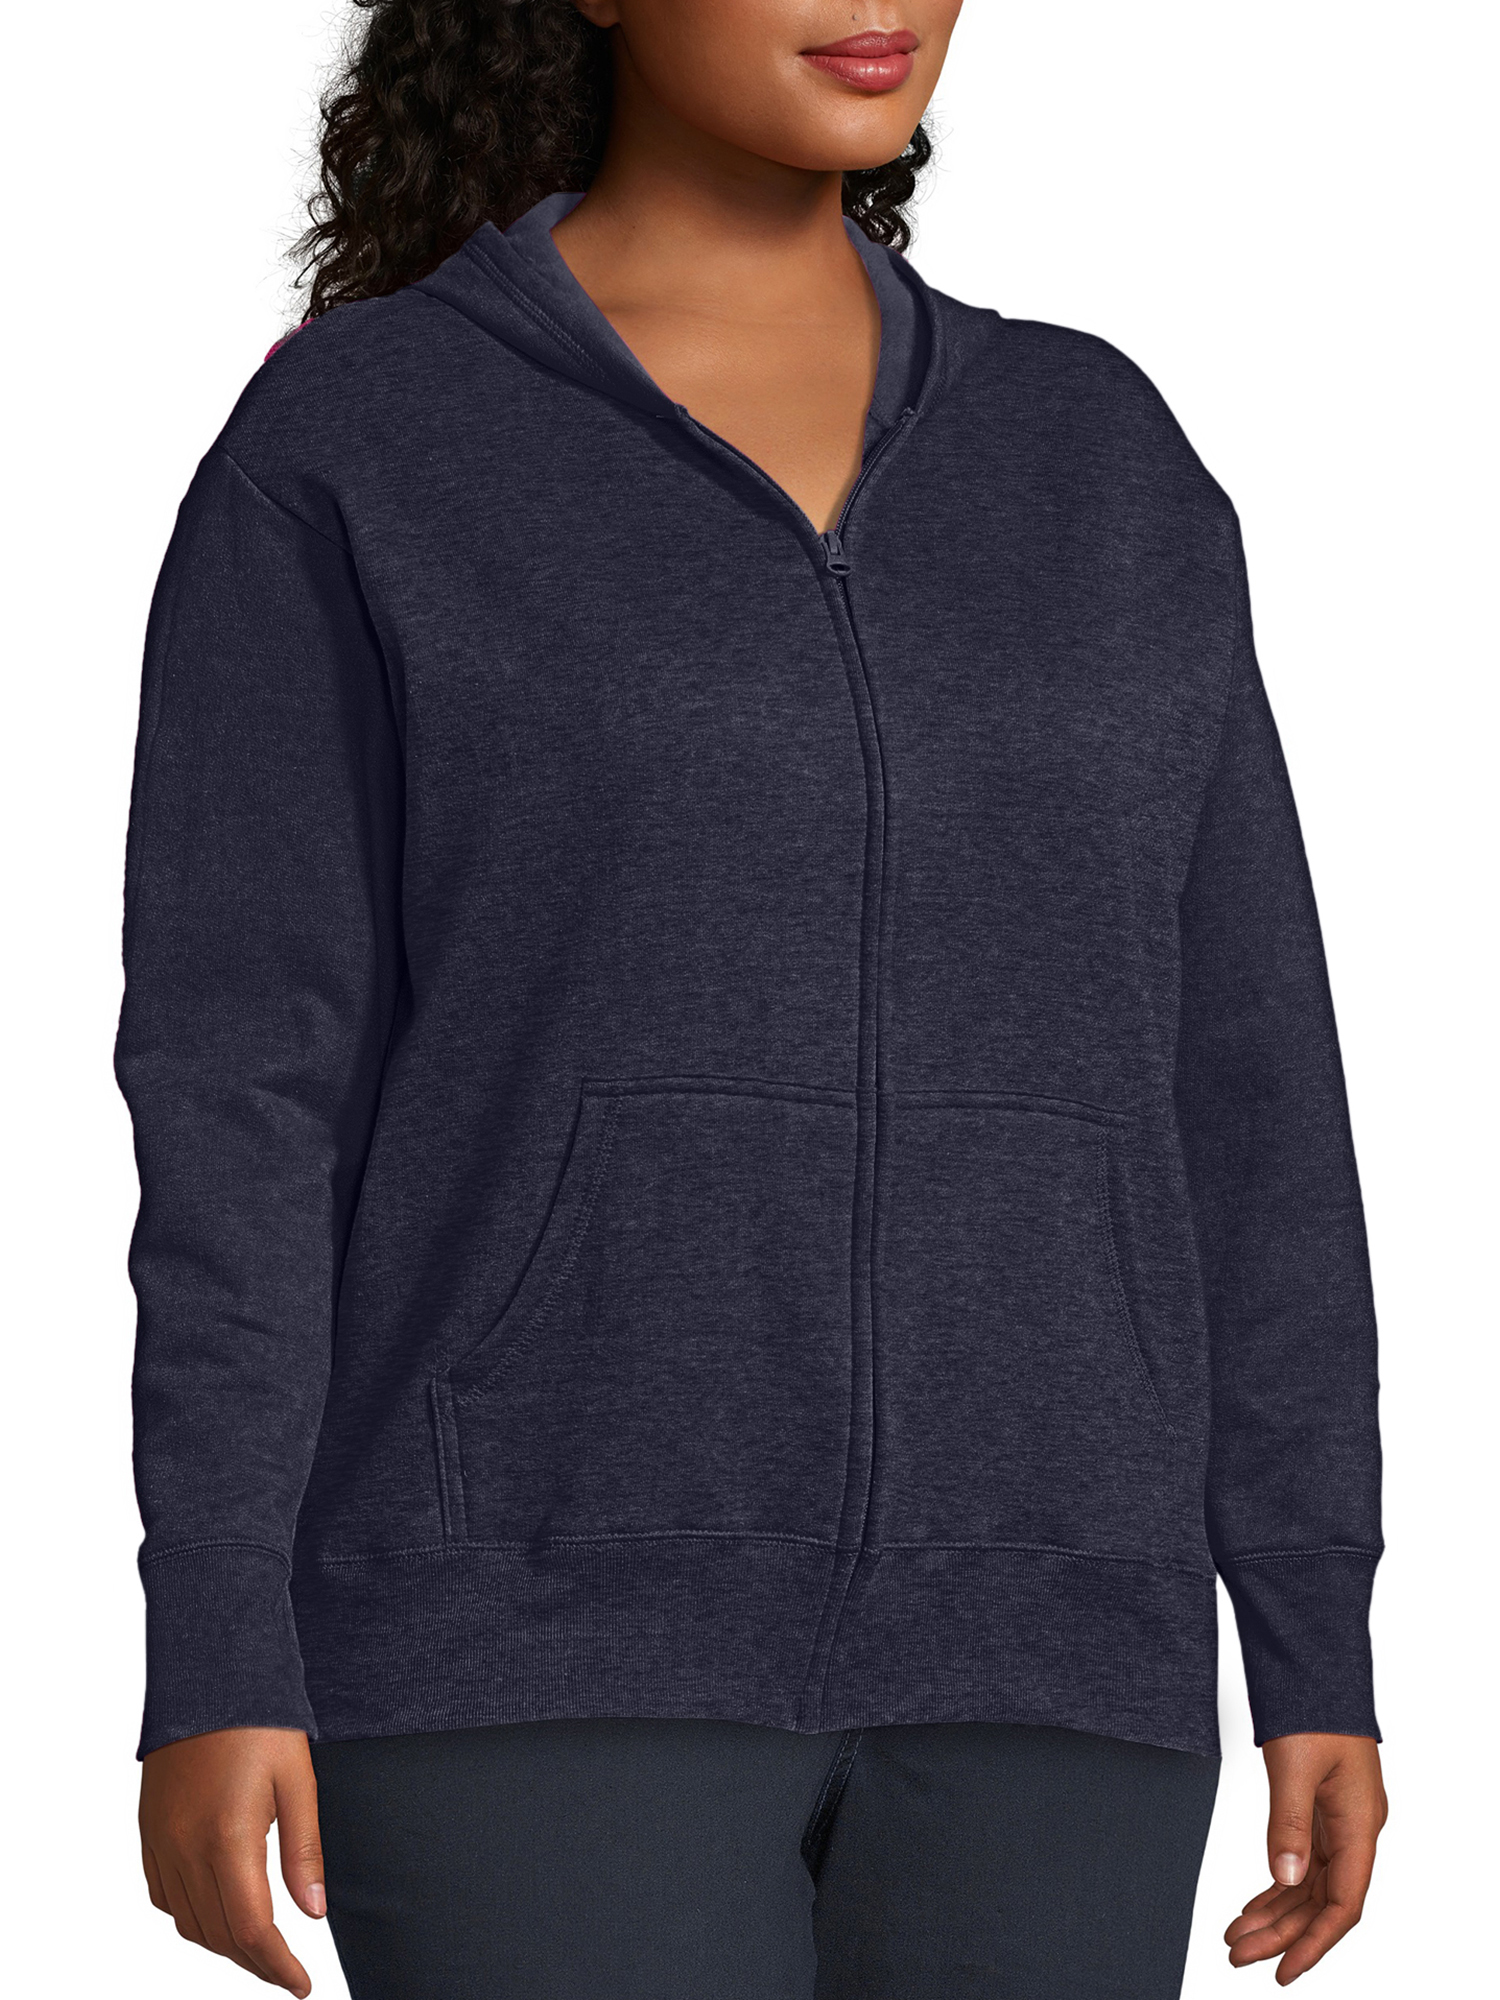 JMS by Hanes Women's Plus Size Fleece Zip Hood Jacket - image 4 of 6